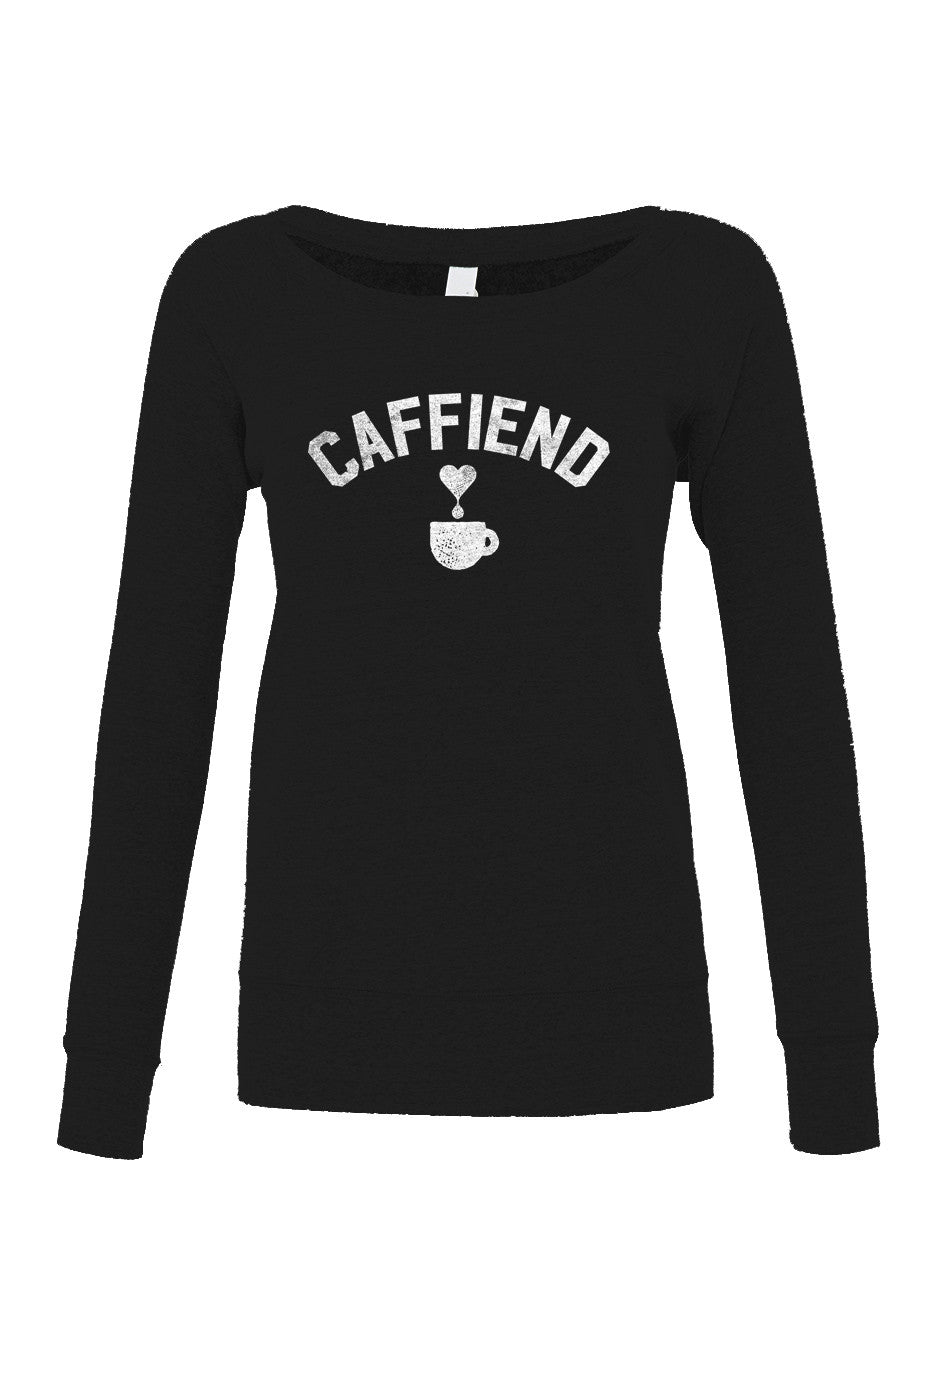 Women's Caffiend Scoop Neck Fleece - Coffee Caffeine